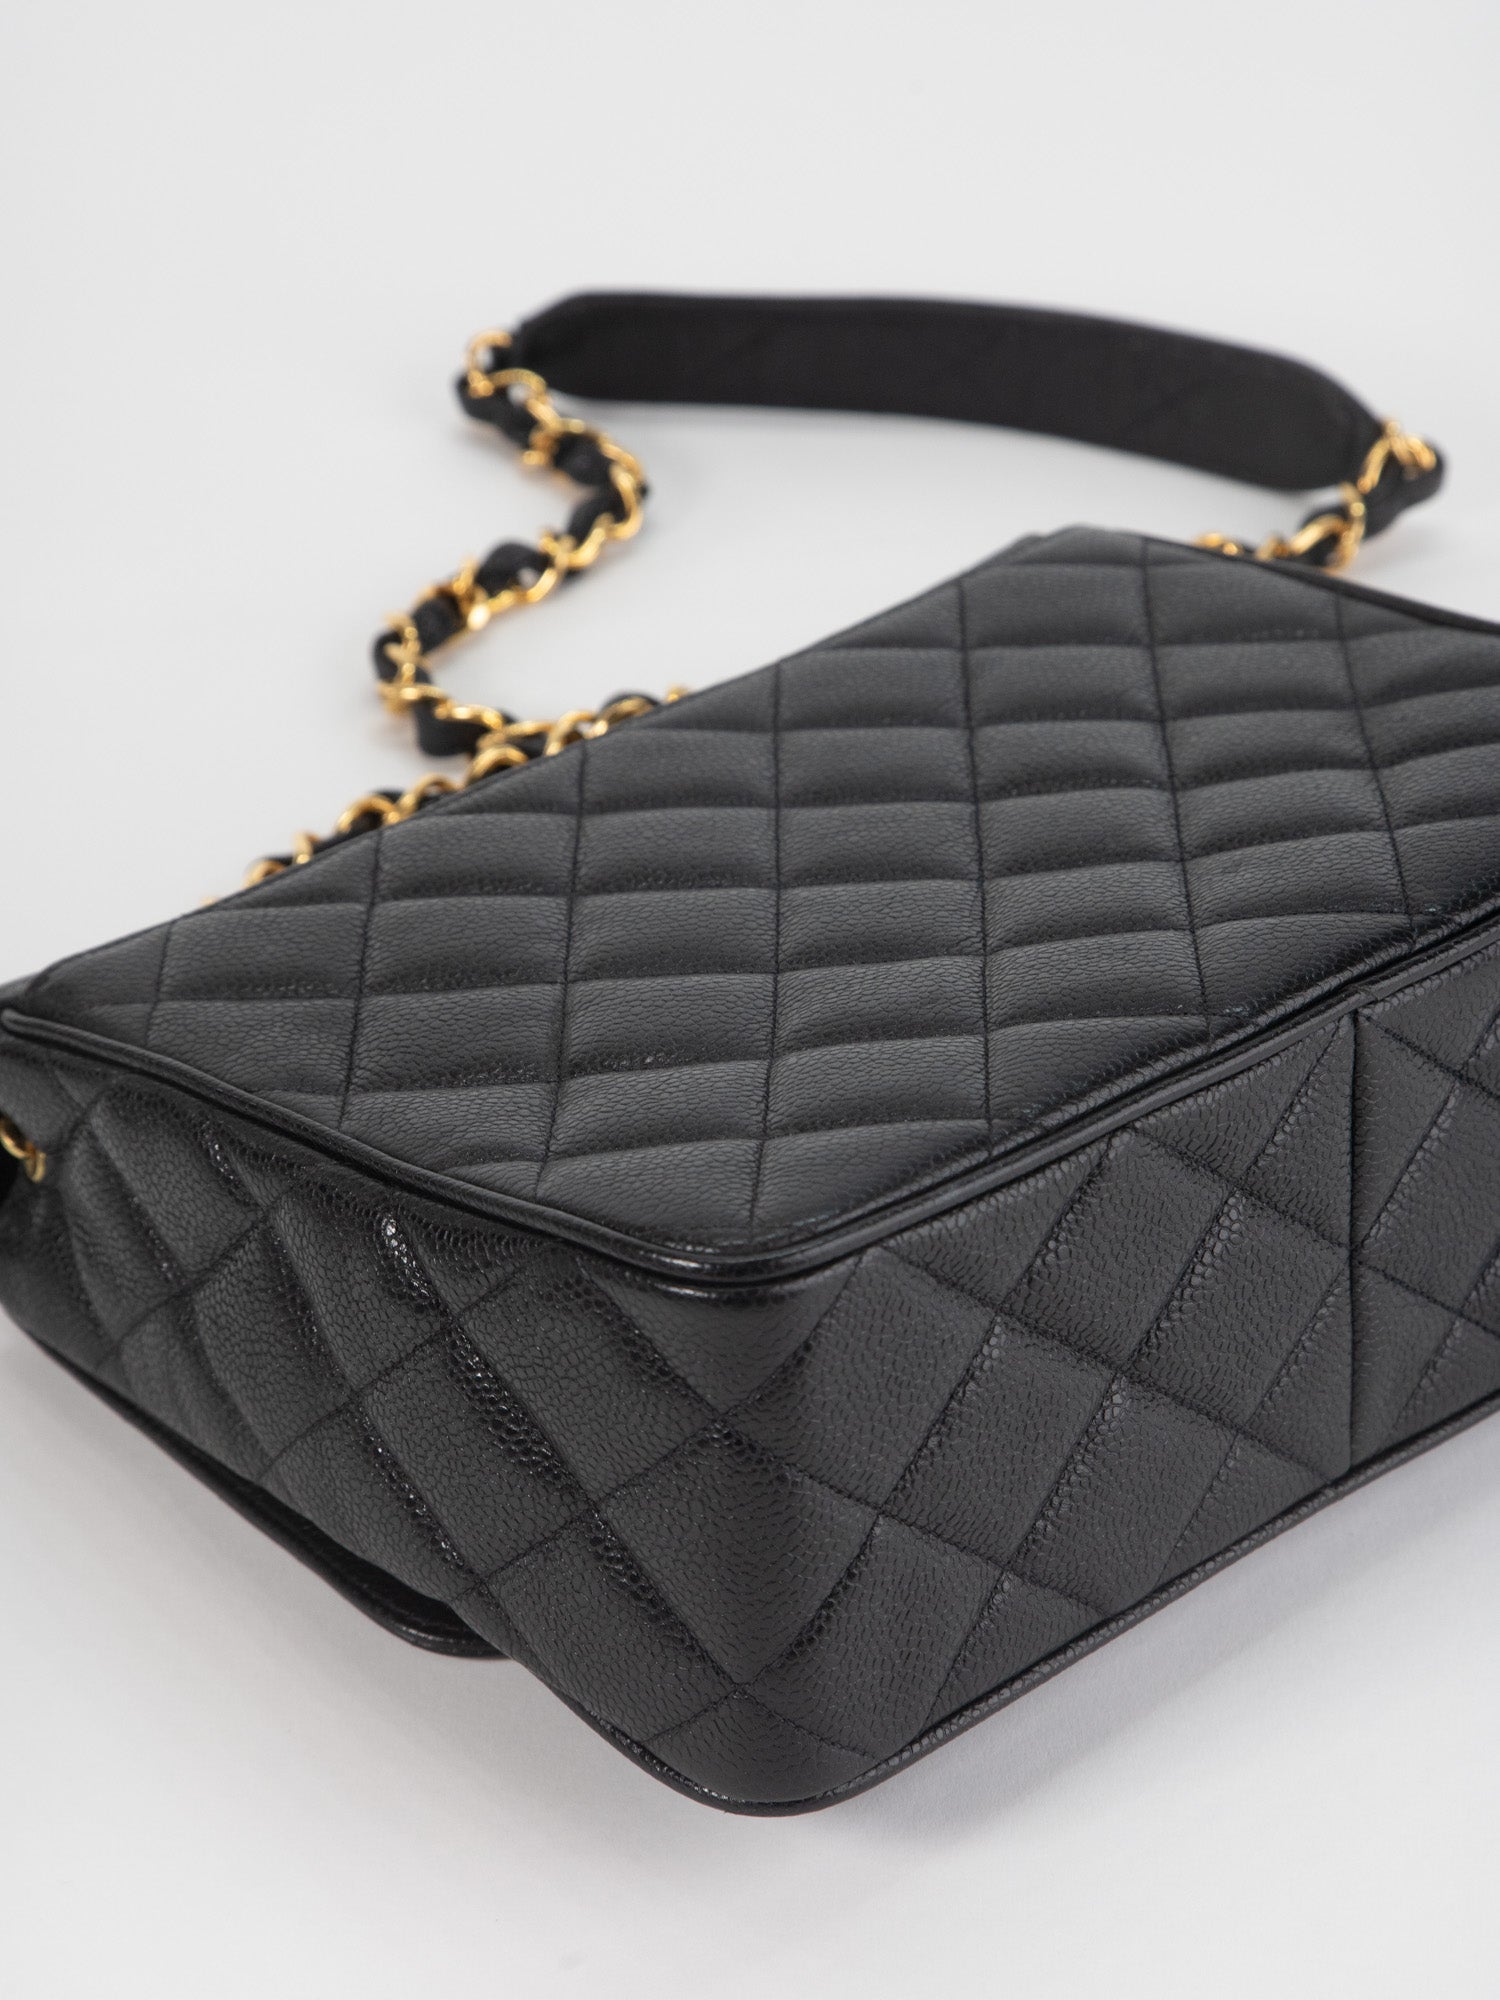 chanel handbag used leather